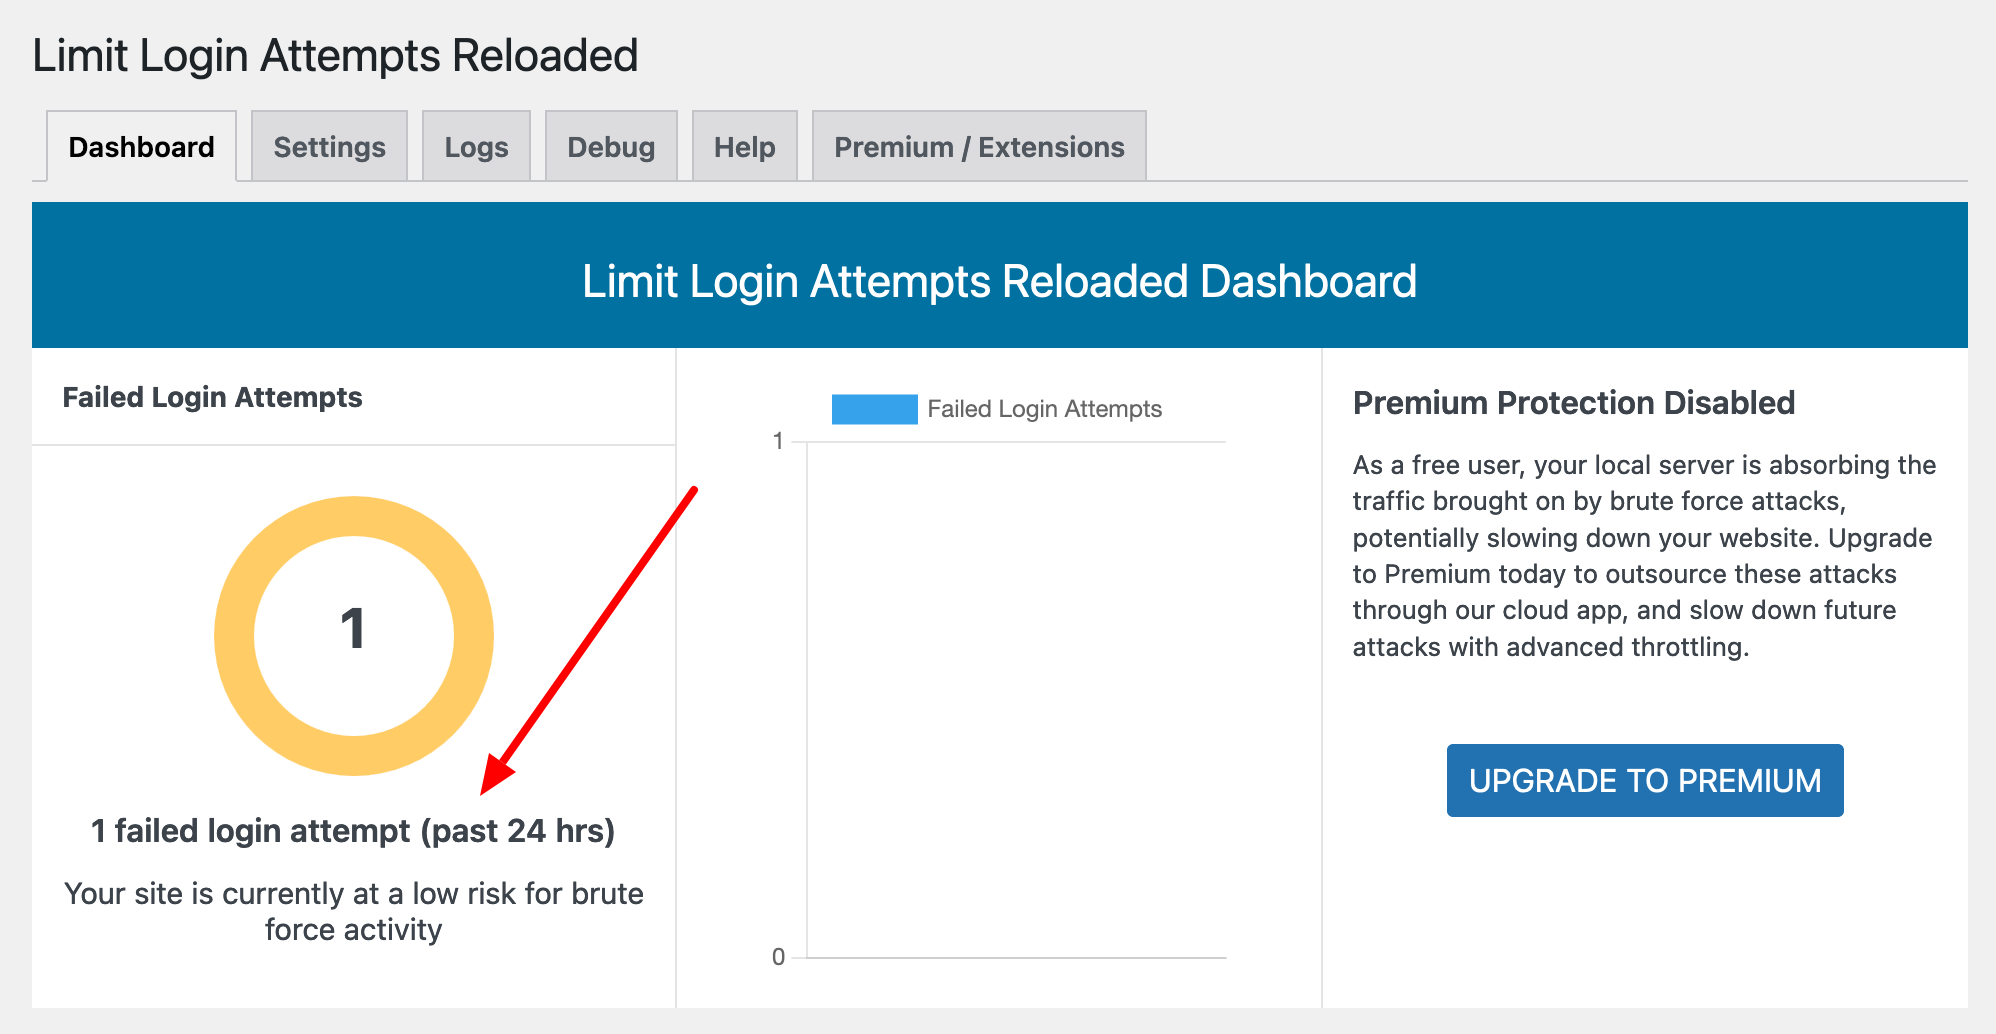 Limit Login Attempts Reloaded dashboard.